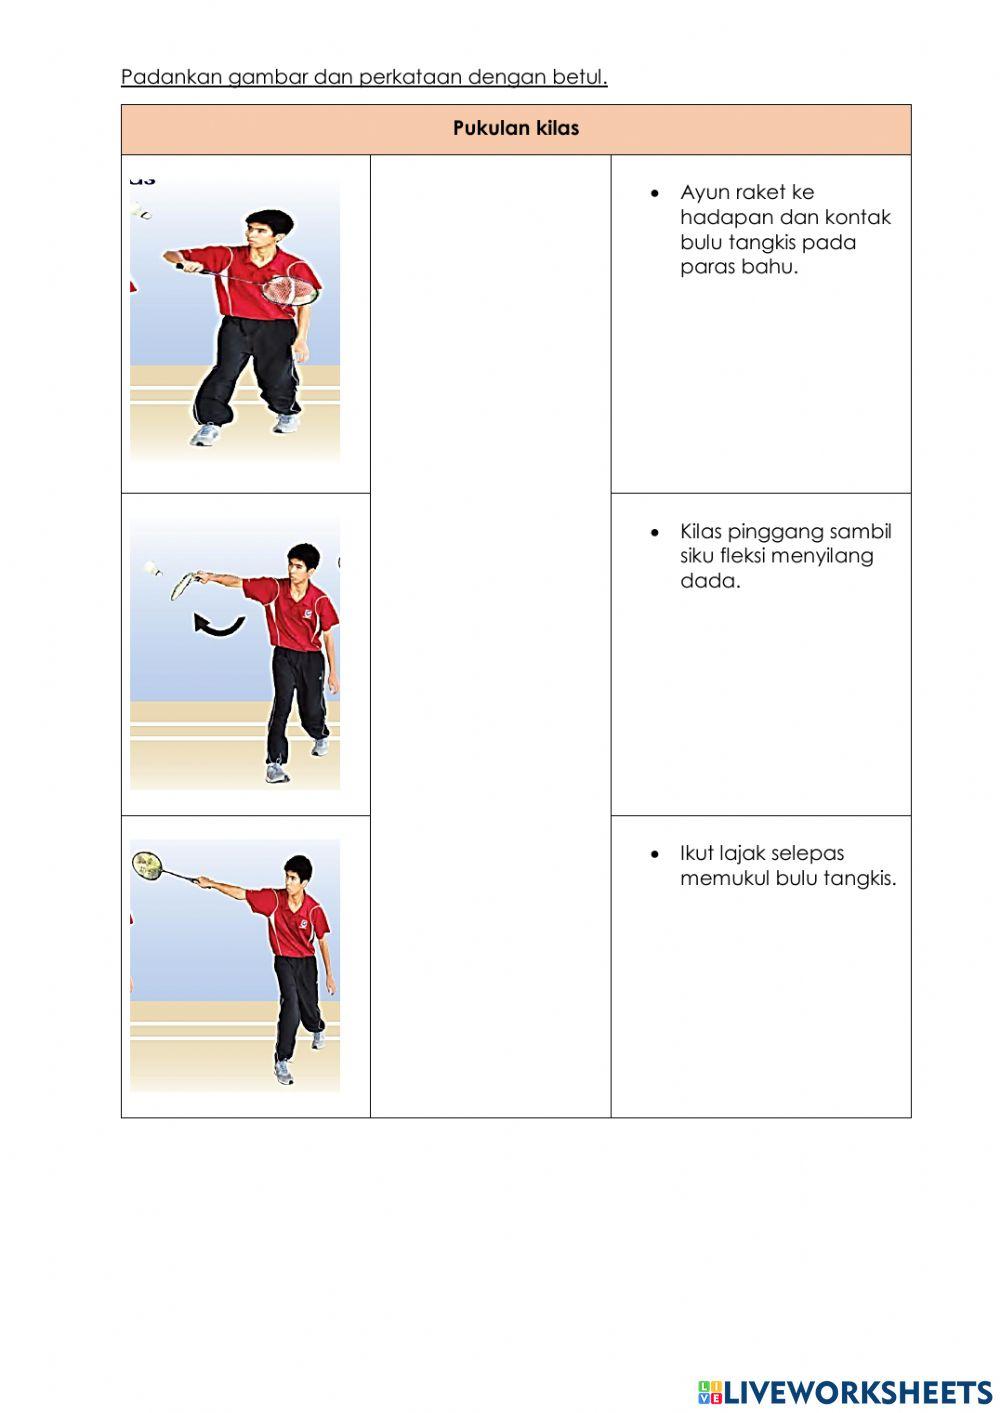 Permainan Badminton (Kemahiran pukulan)